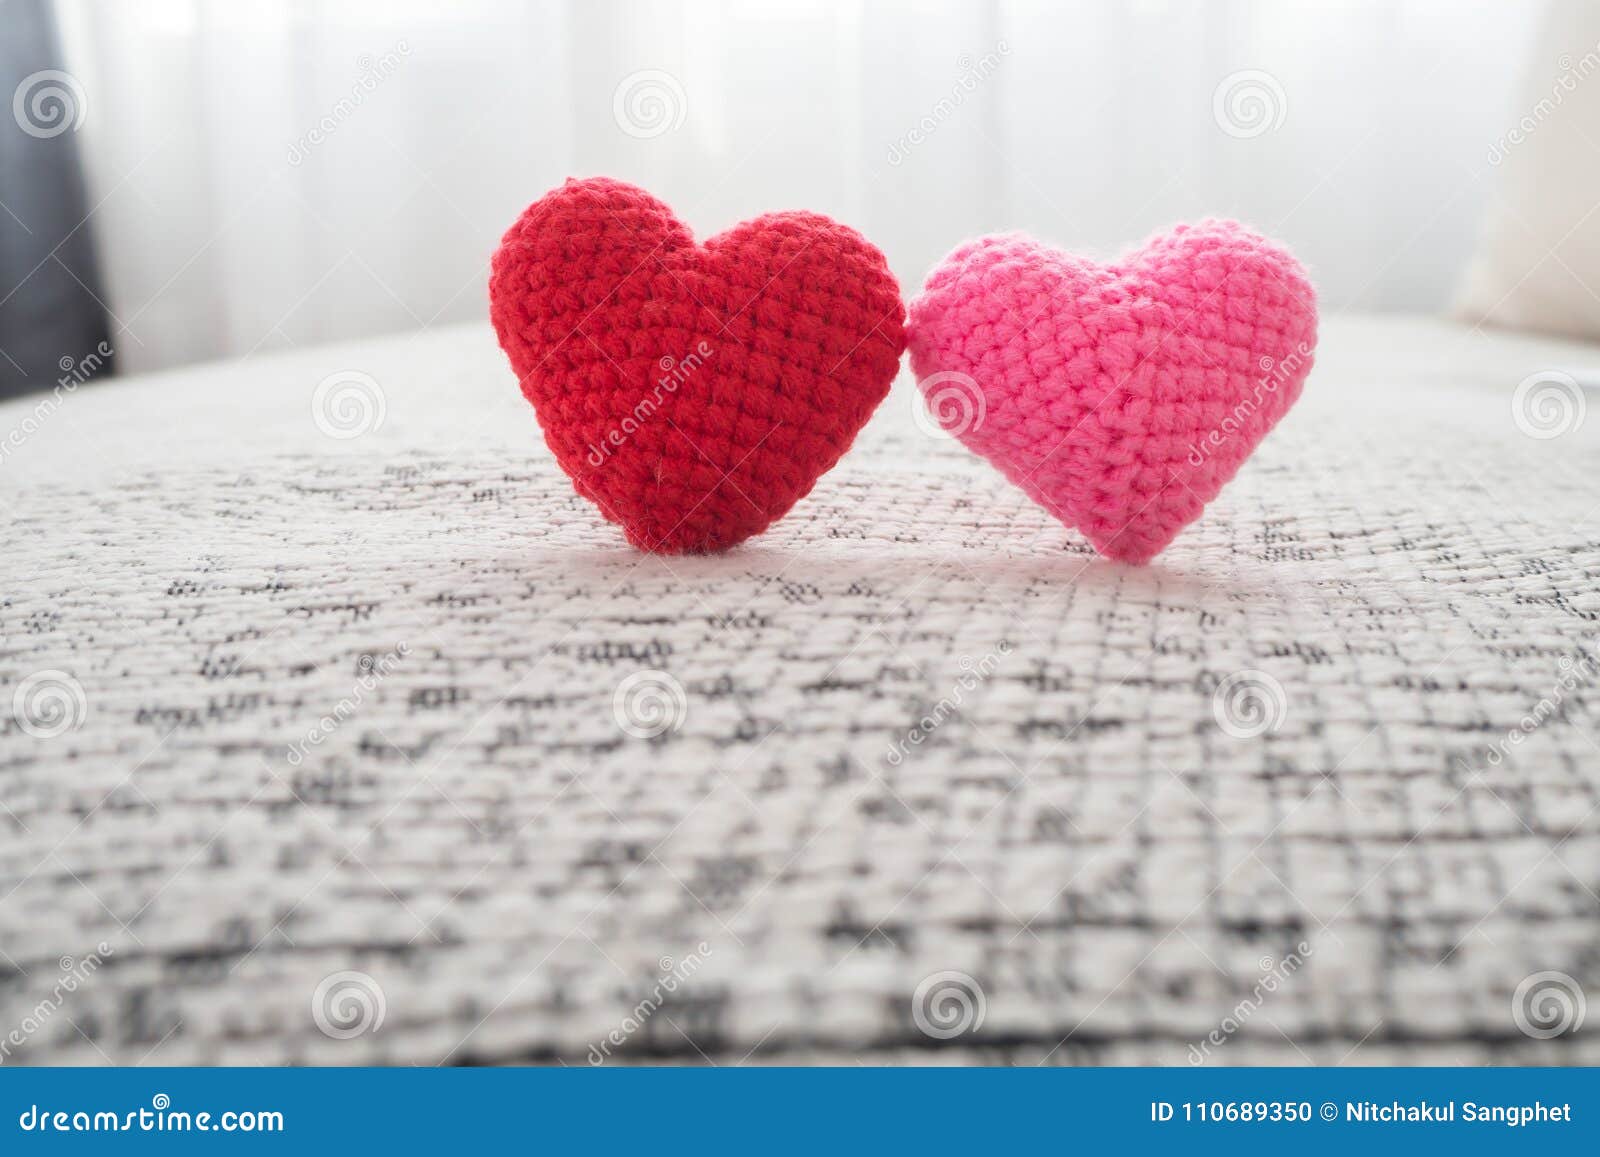 beautiful couple knitted fabric heart  on fabric sofa.